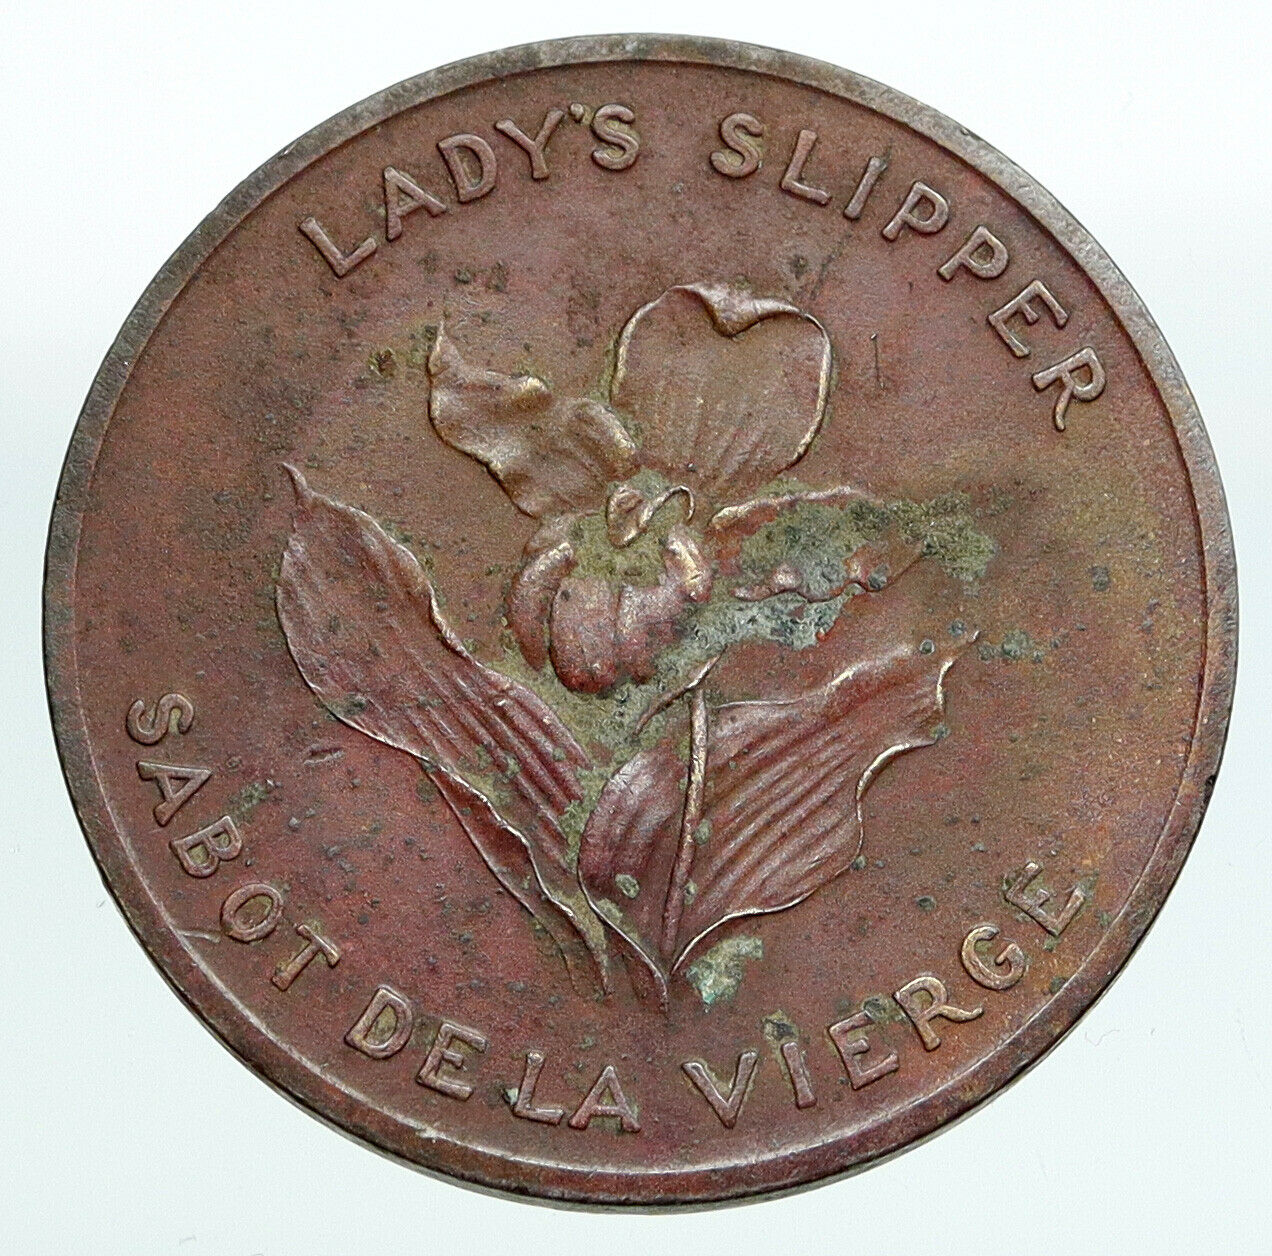 1965-68 PRINCE EDWARD ISLAND UK CANADA Lady Slipper SHELL OIL TOKEN Medal i90992